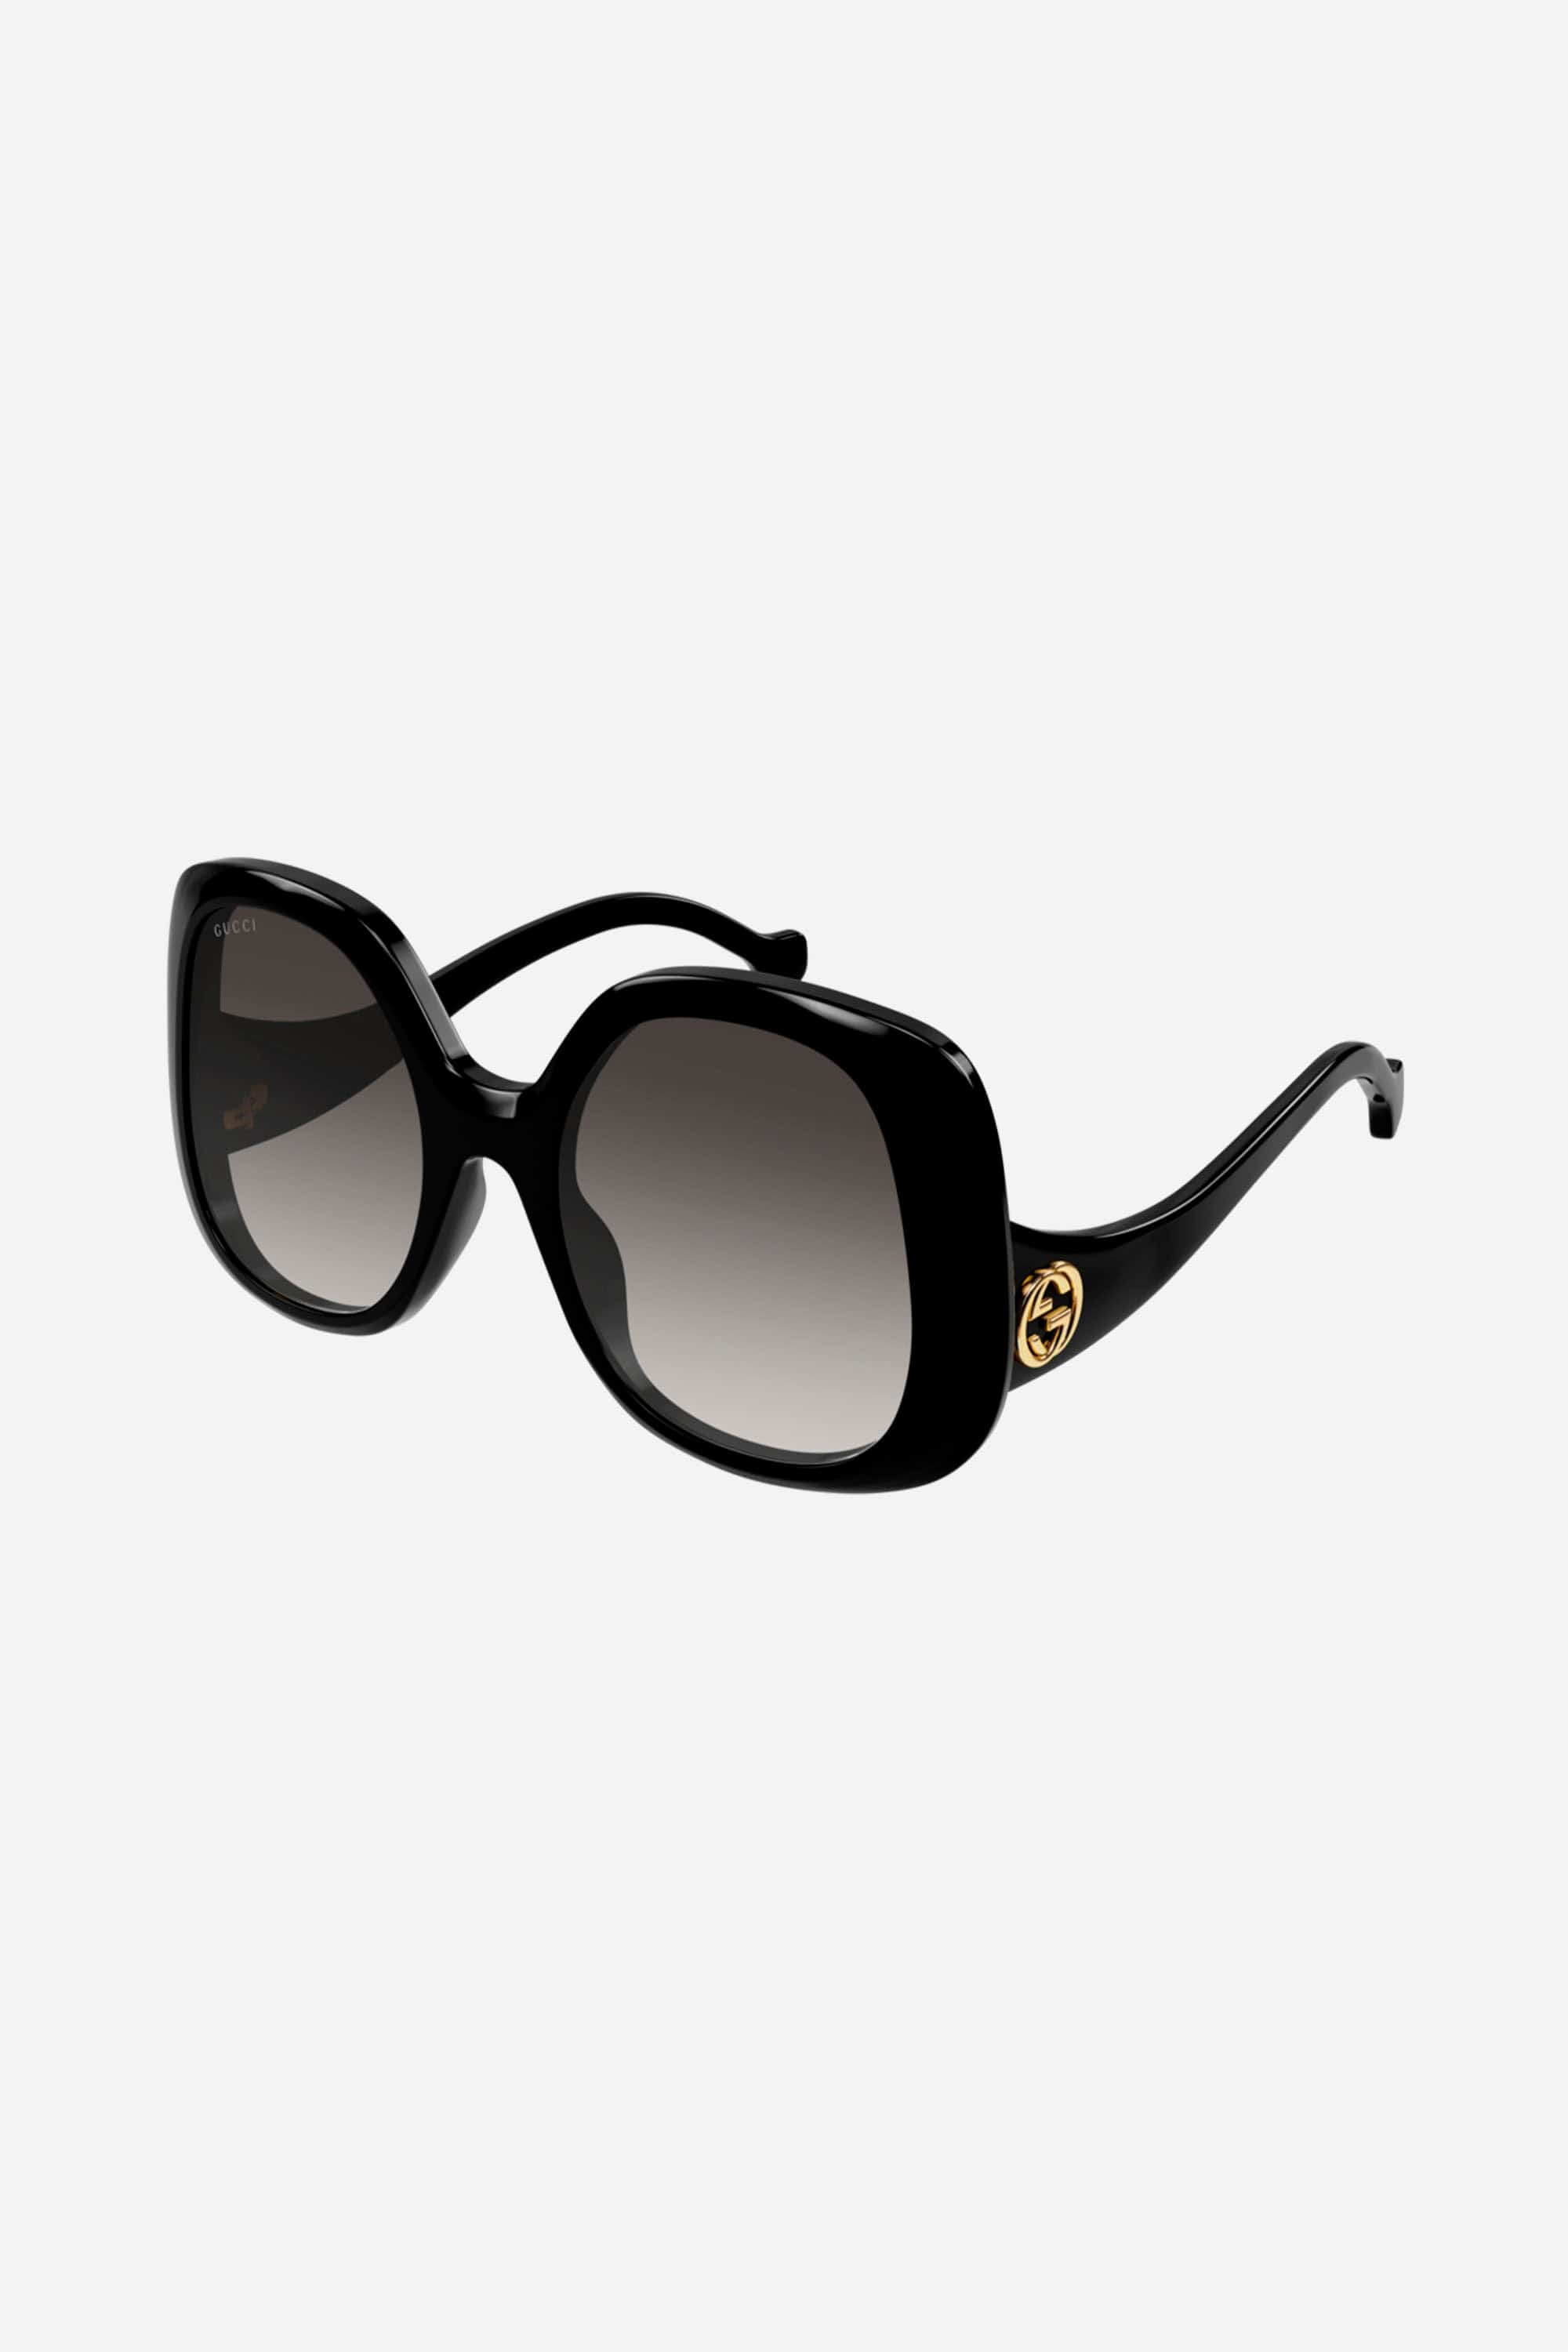 Gucci vintage look black sunglasses - Eyewear Club